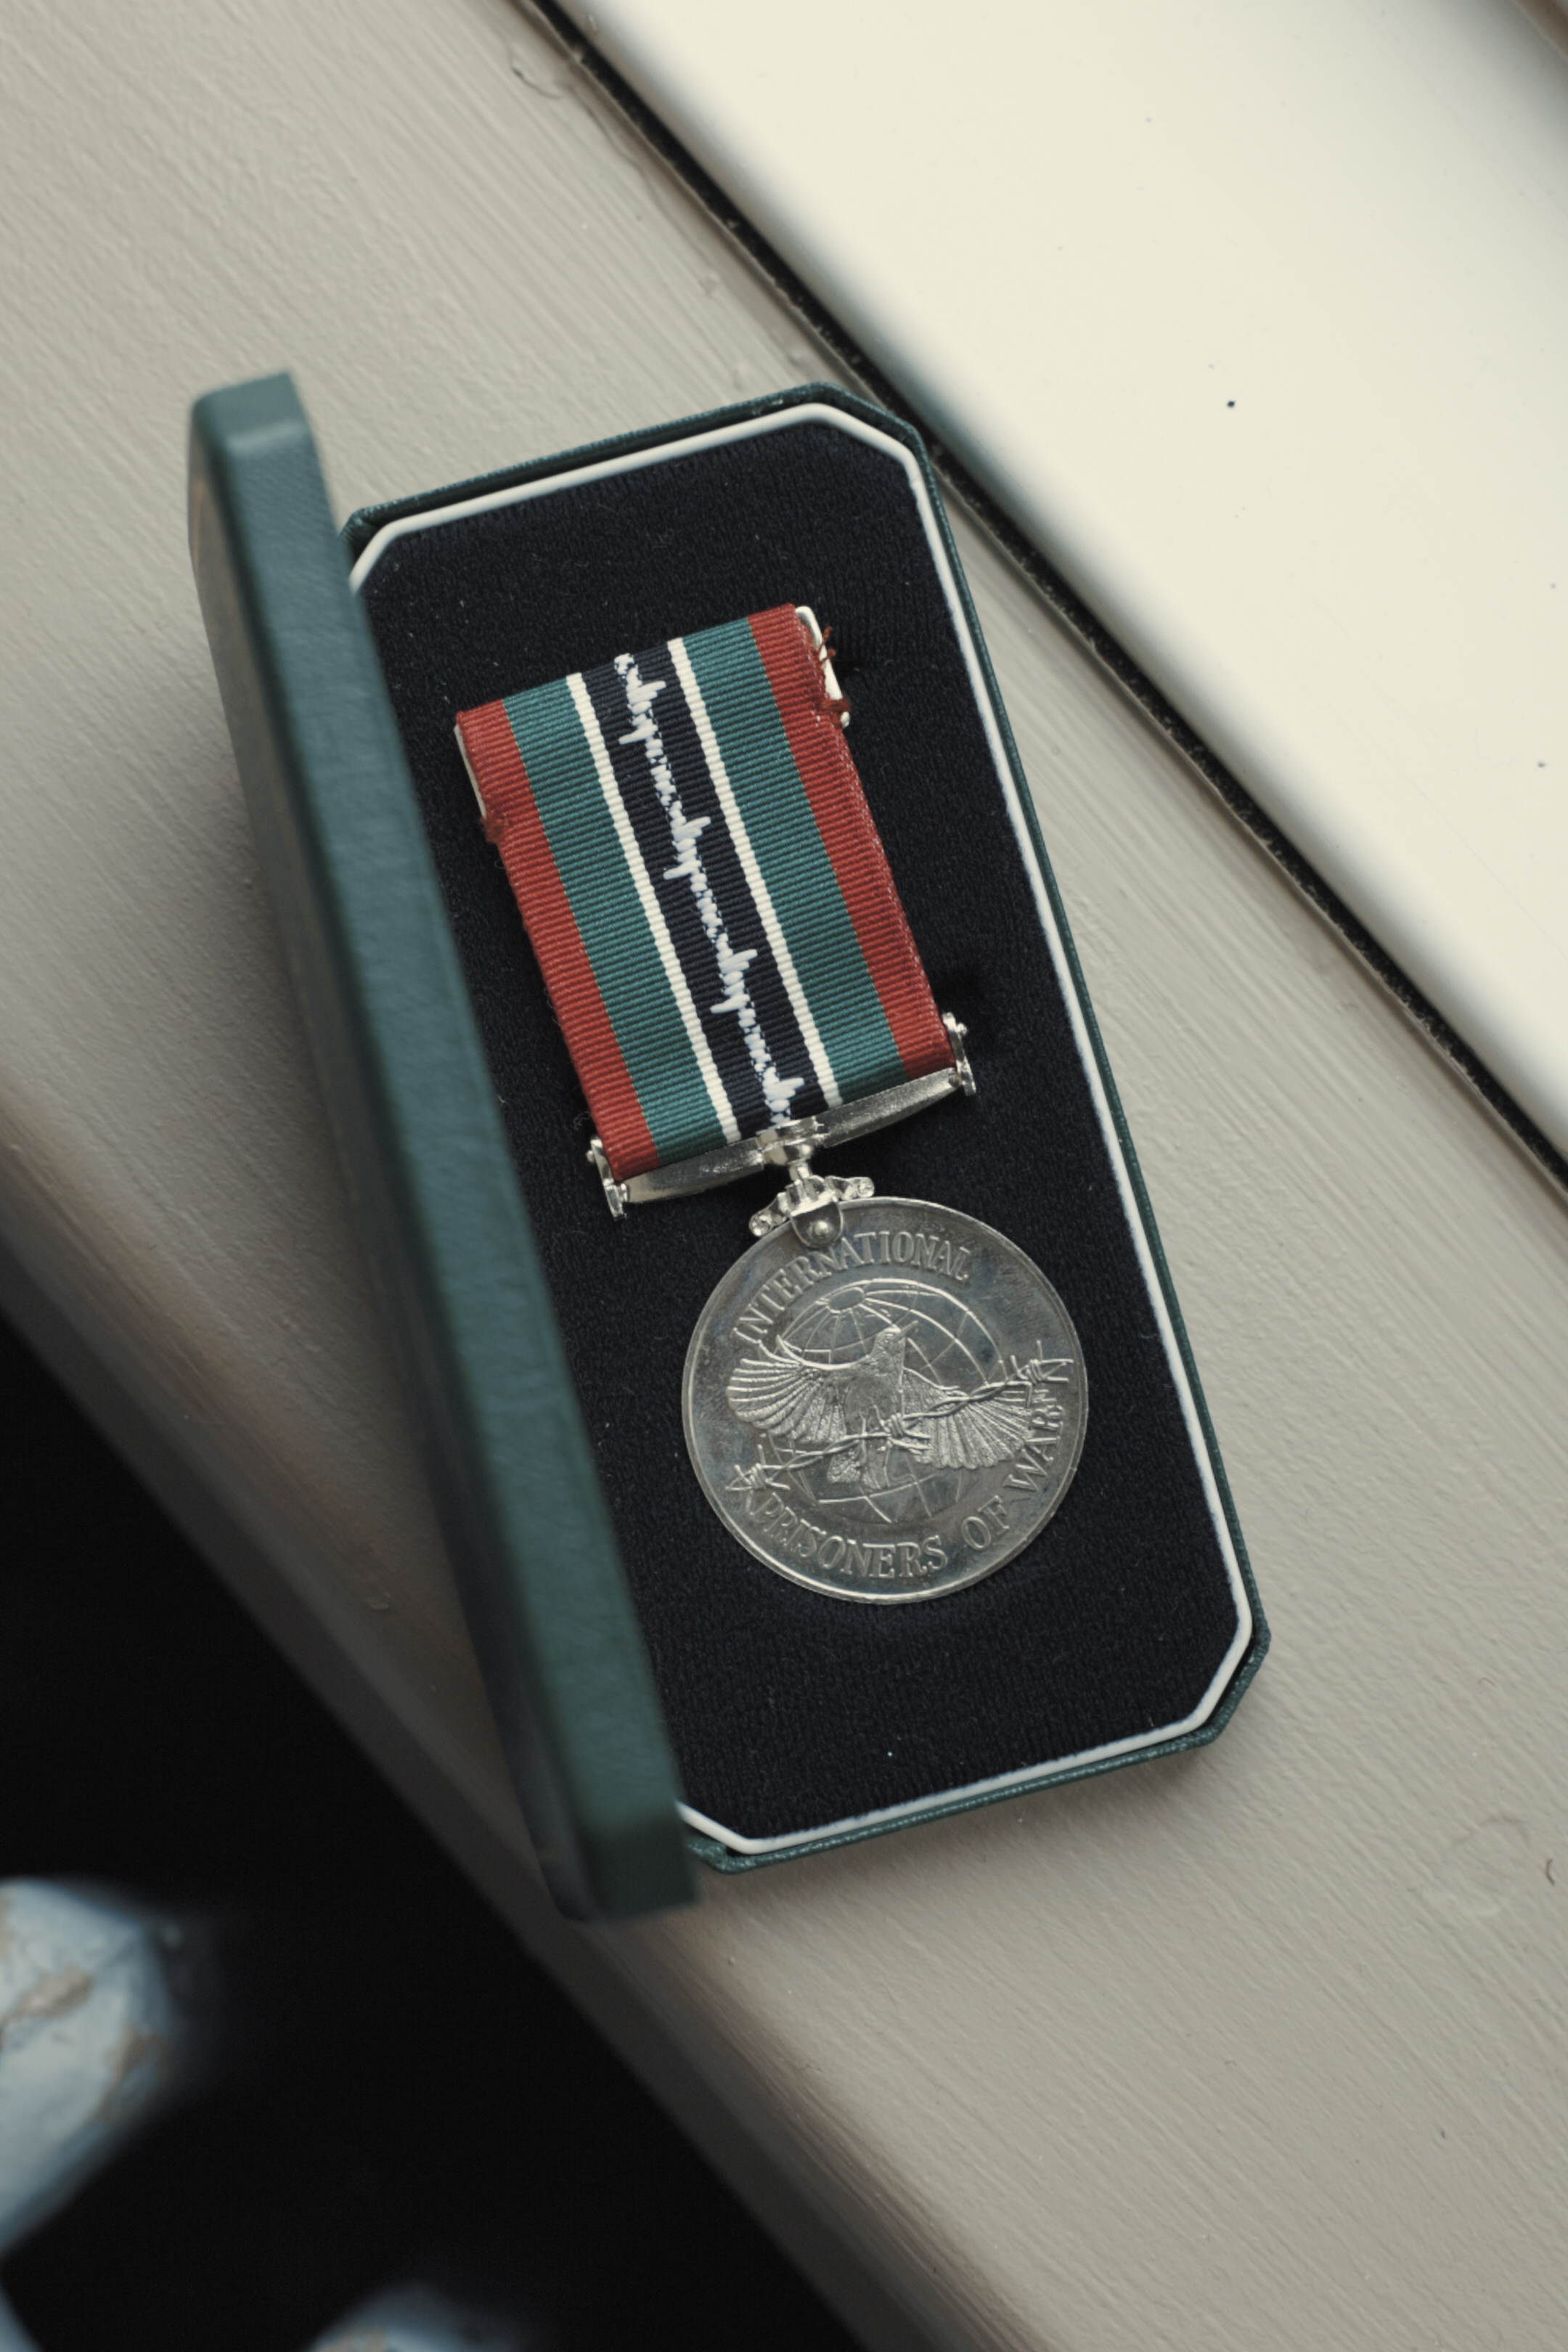 A commemorative Allied Ex-Prisoners of War medal